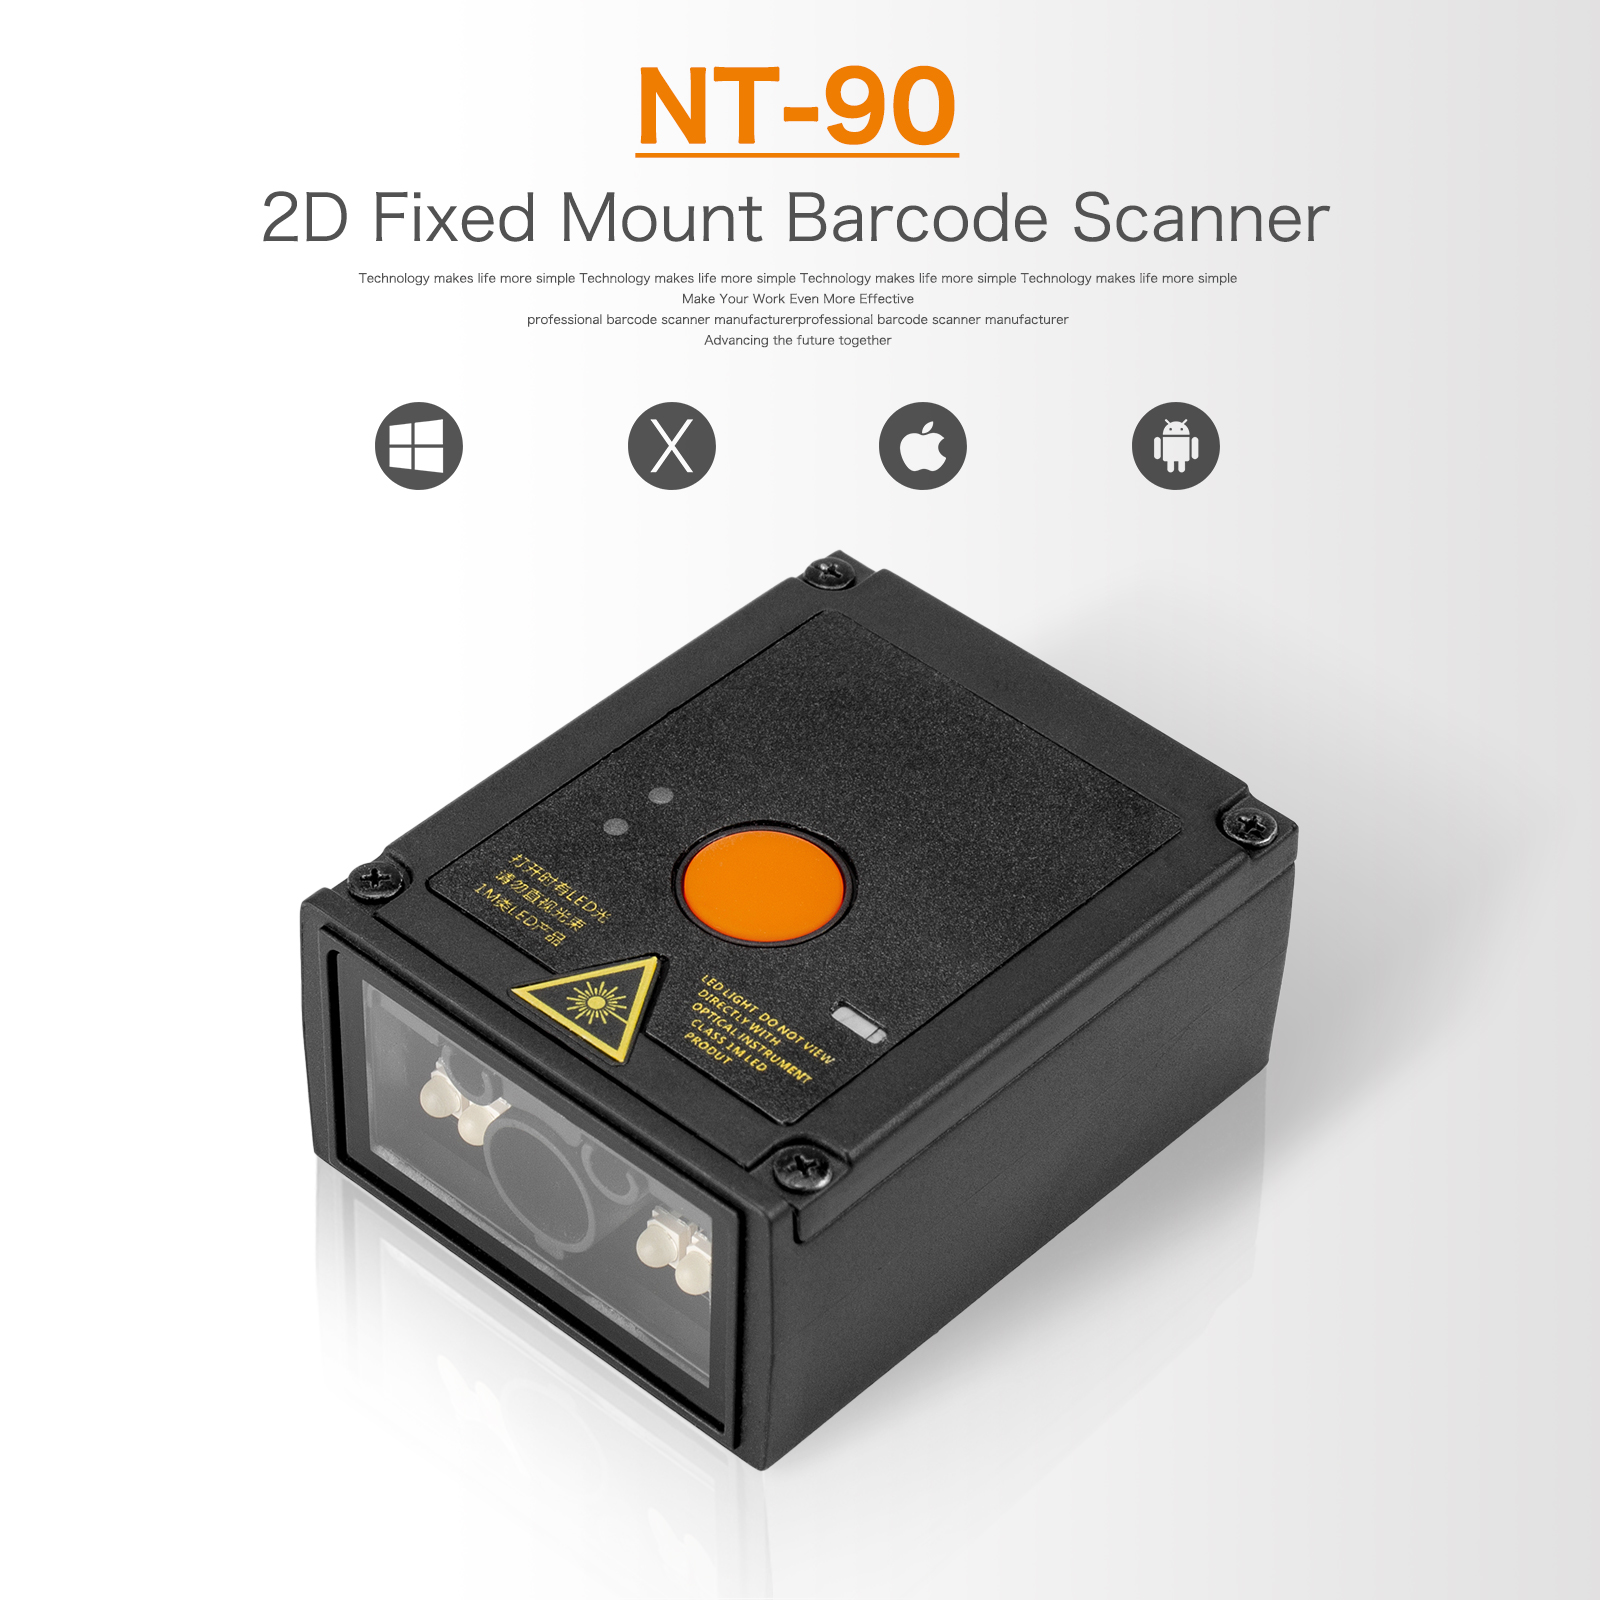 NETUM NT-90 Industrial QR Fixed Mount Barcode Scanner